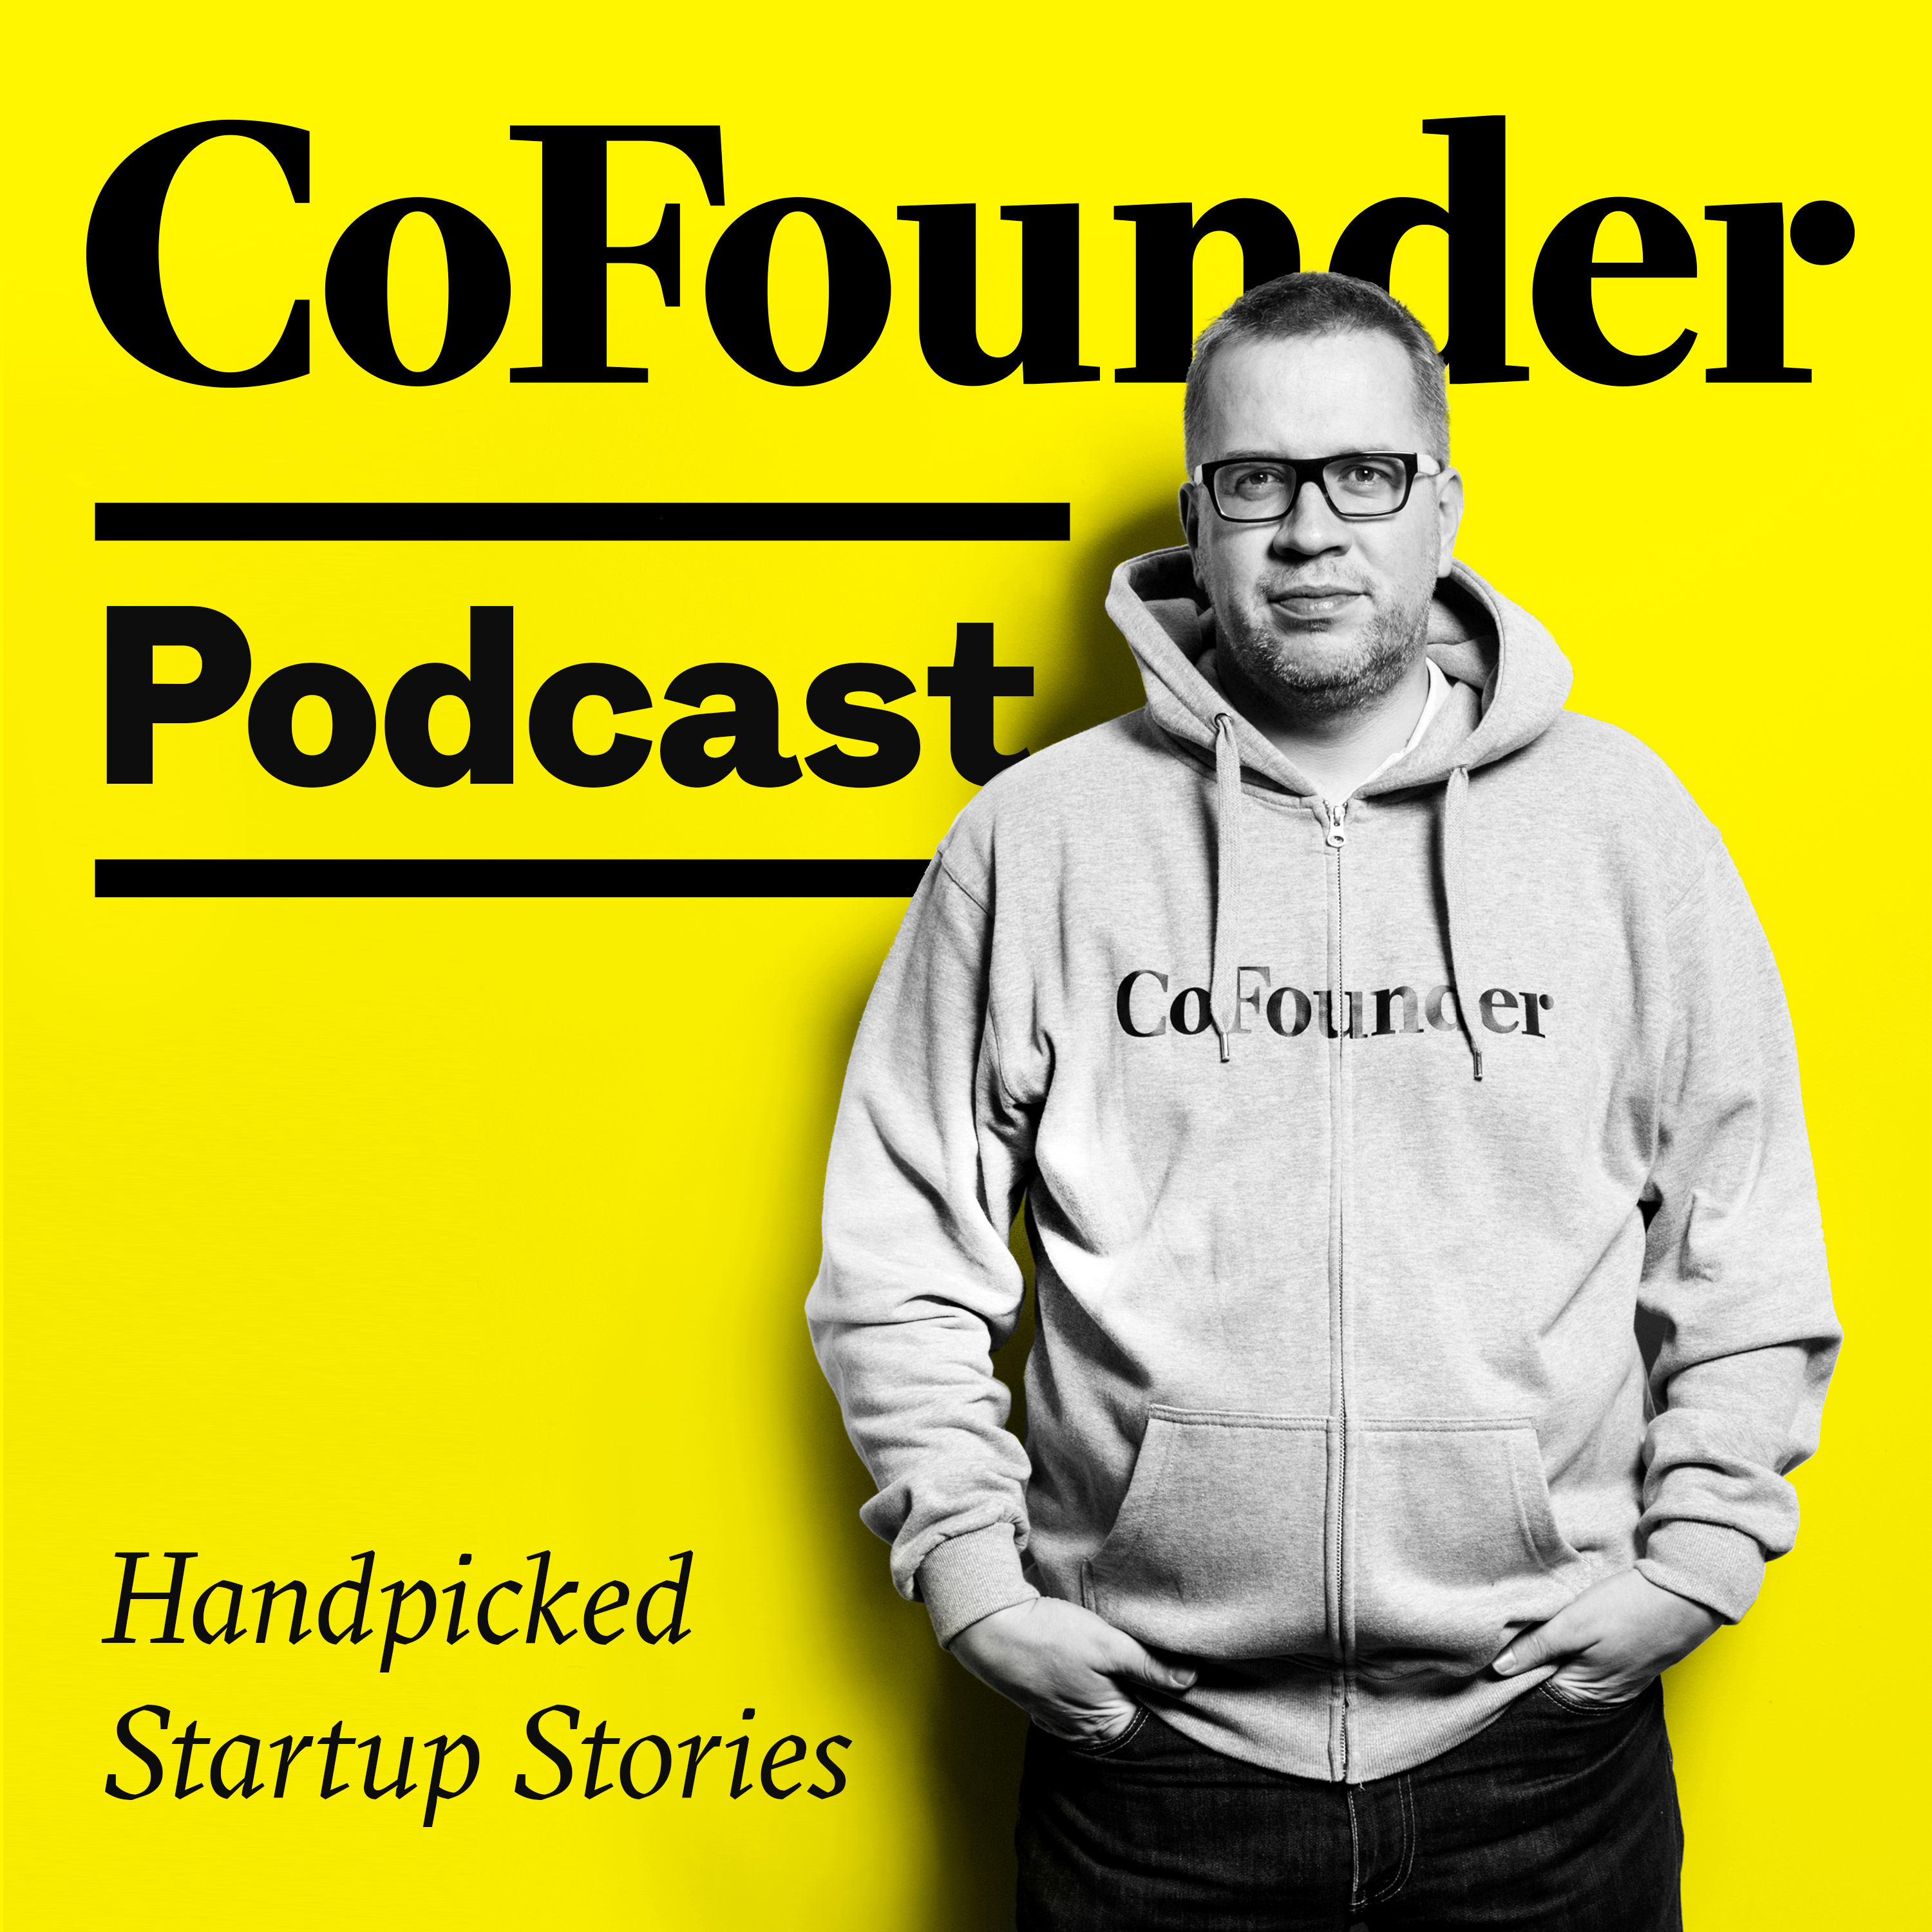 CoFounder Podcast